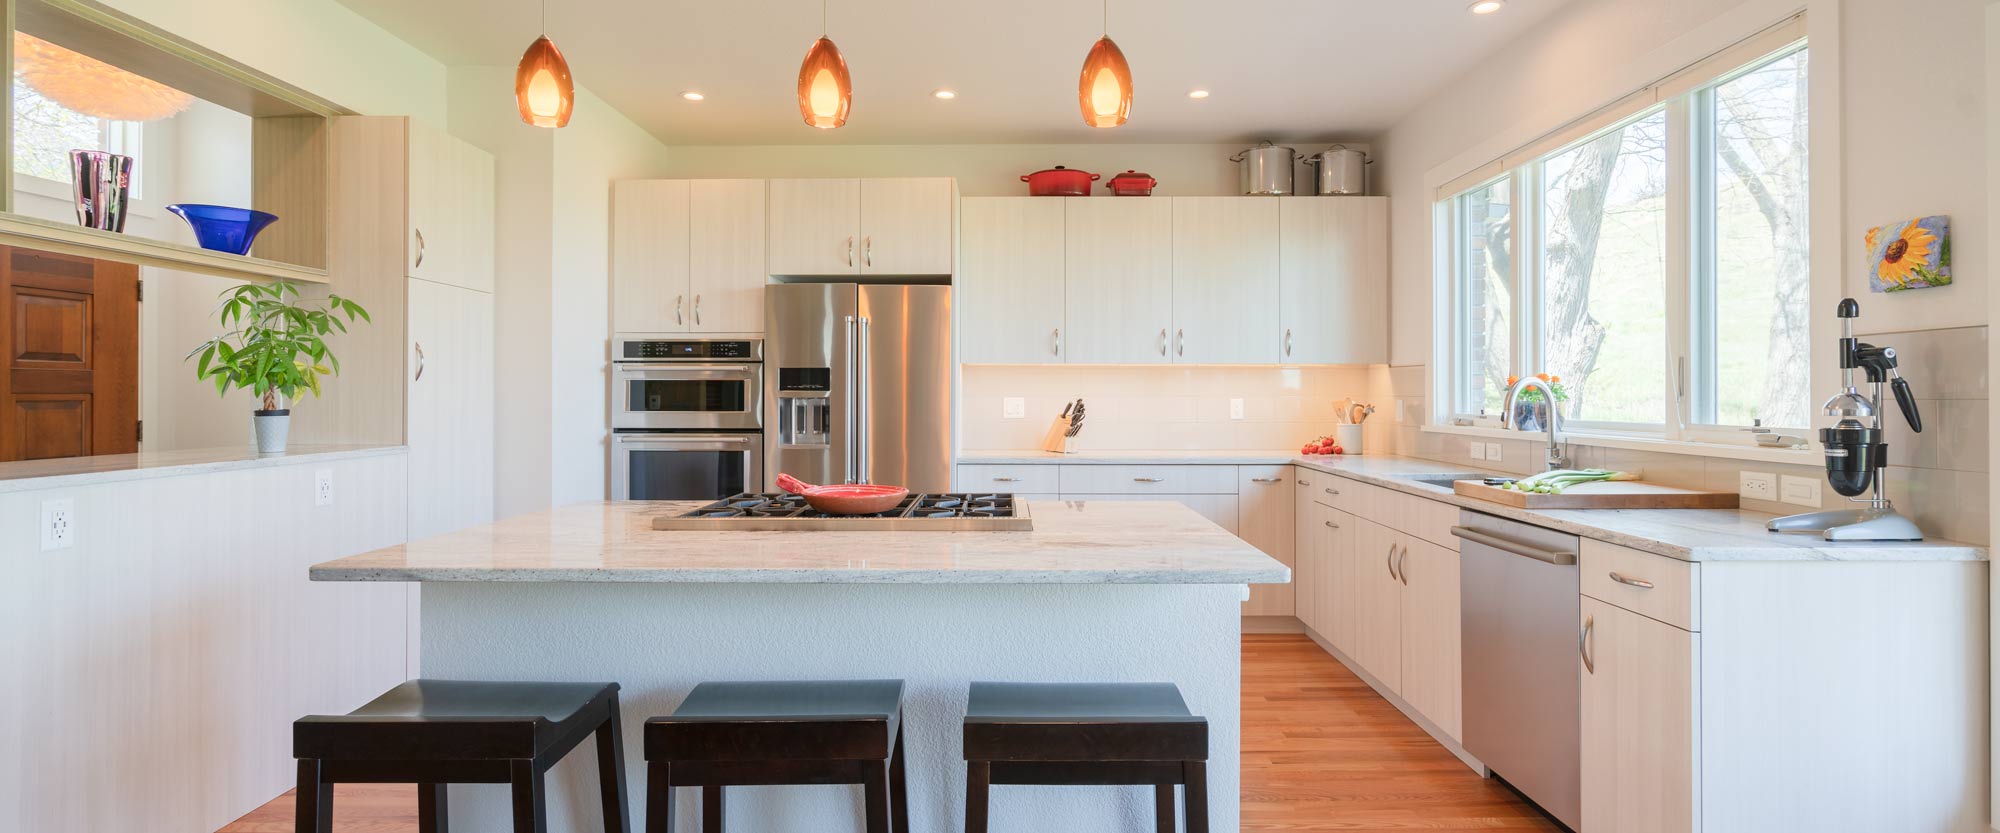 Modern Kitchen - Real Estate Photography